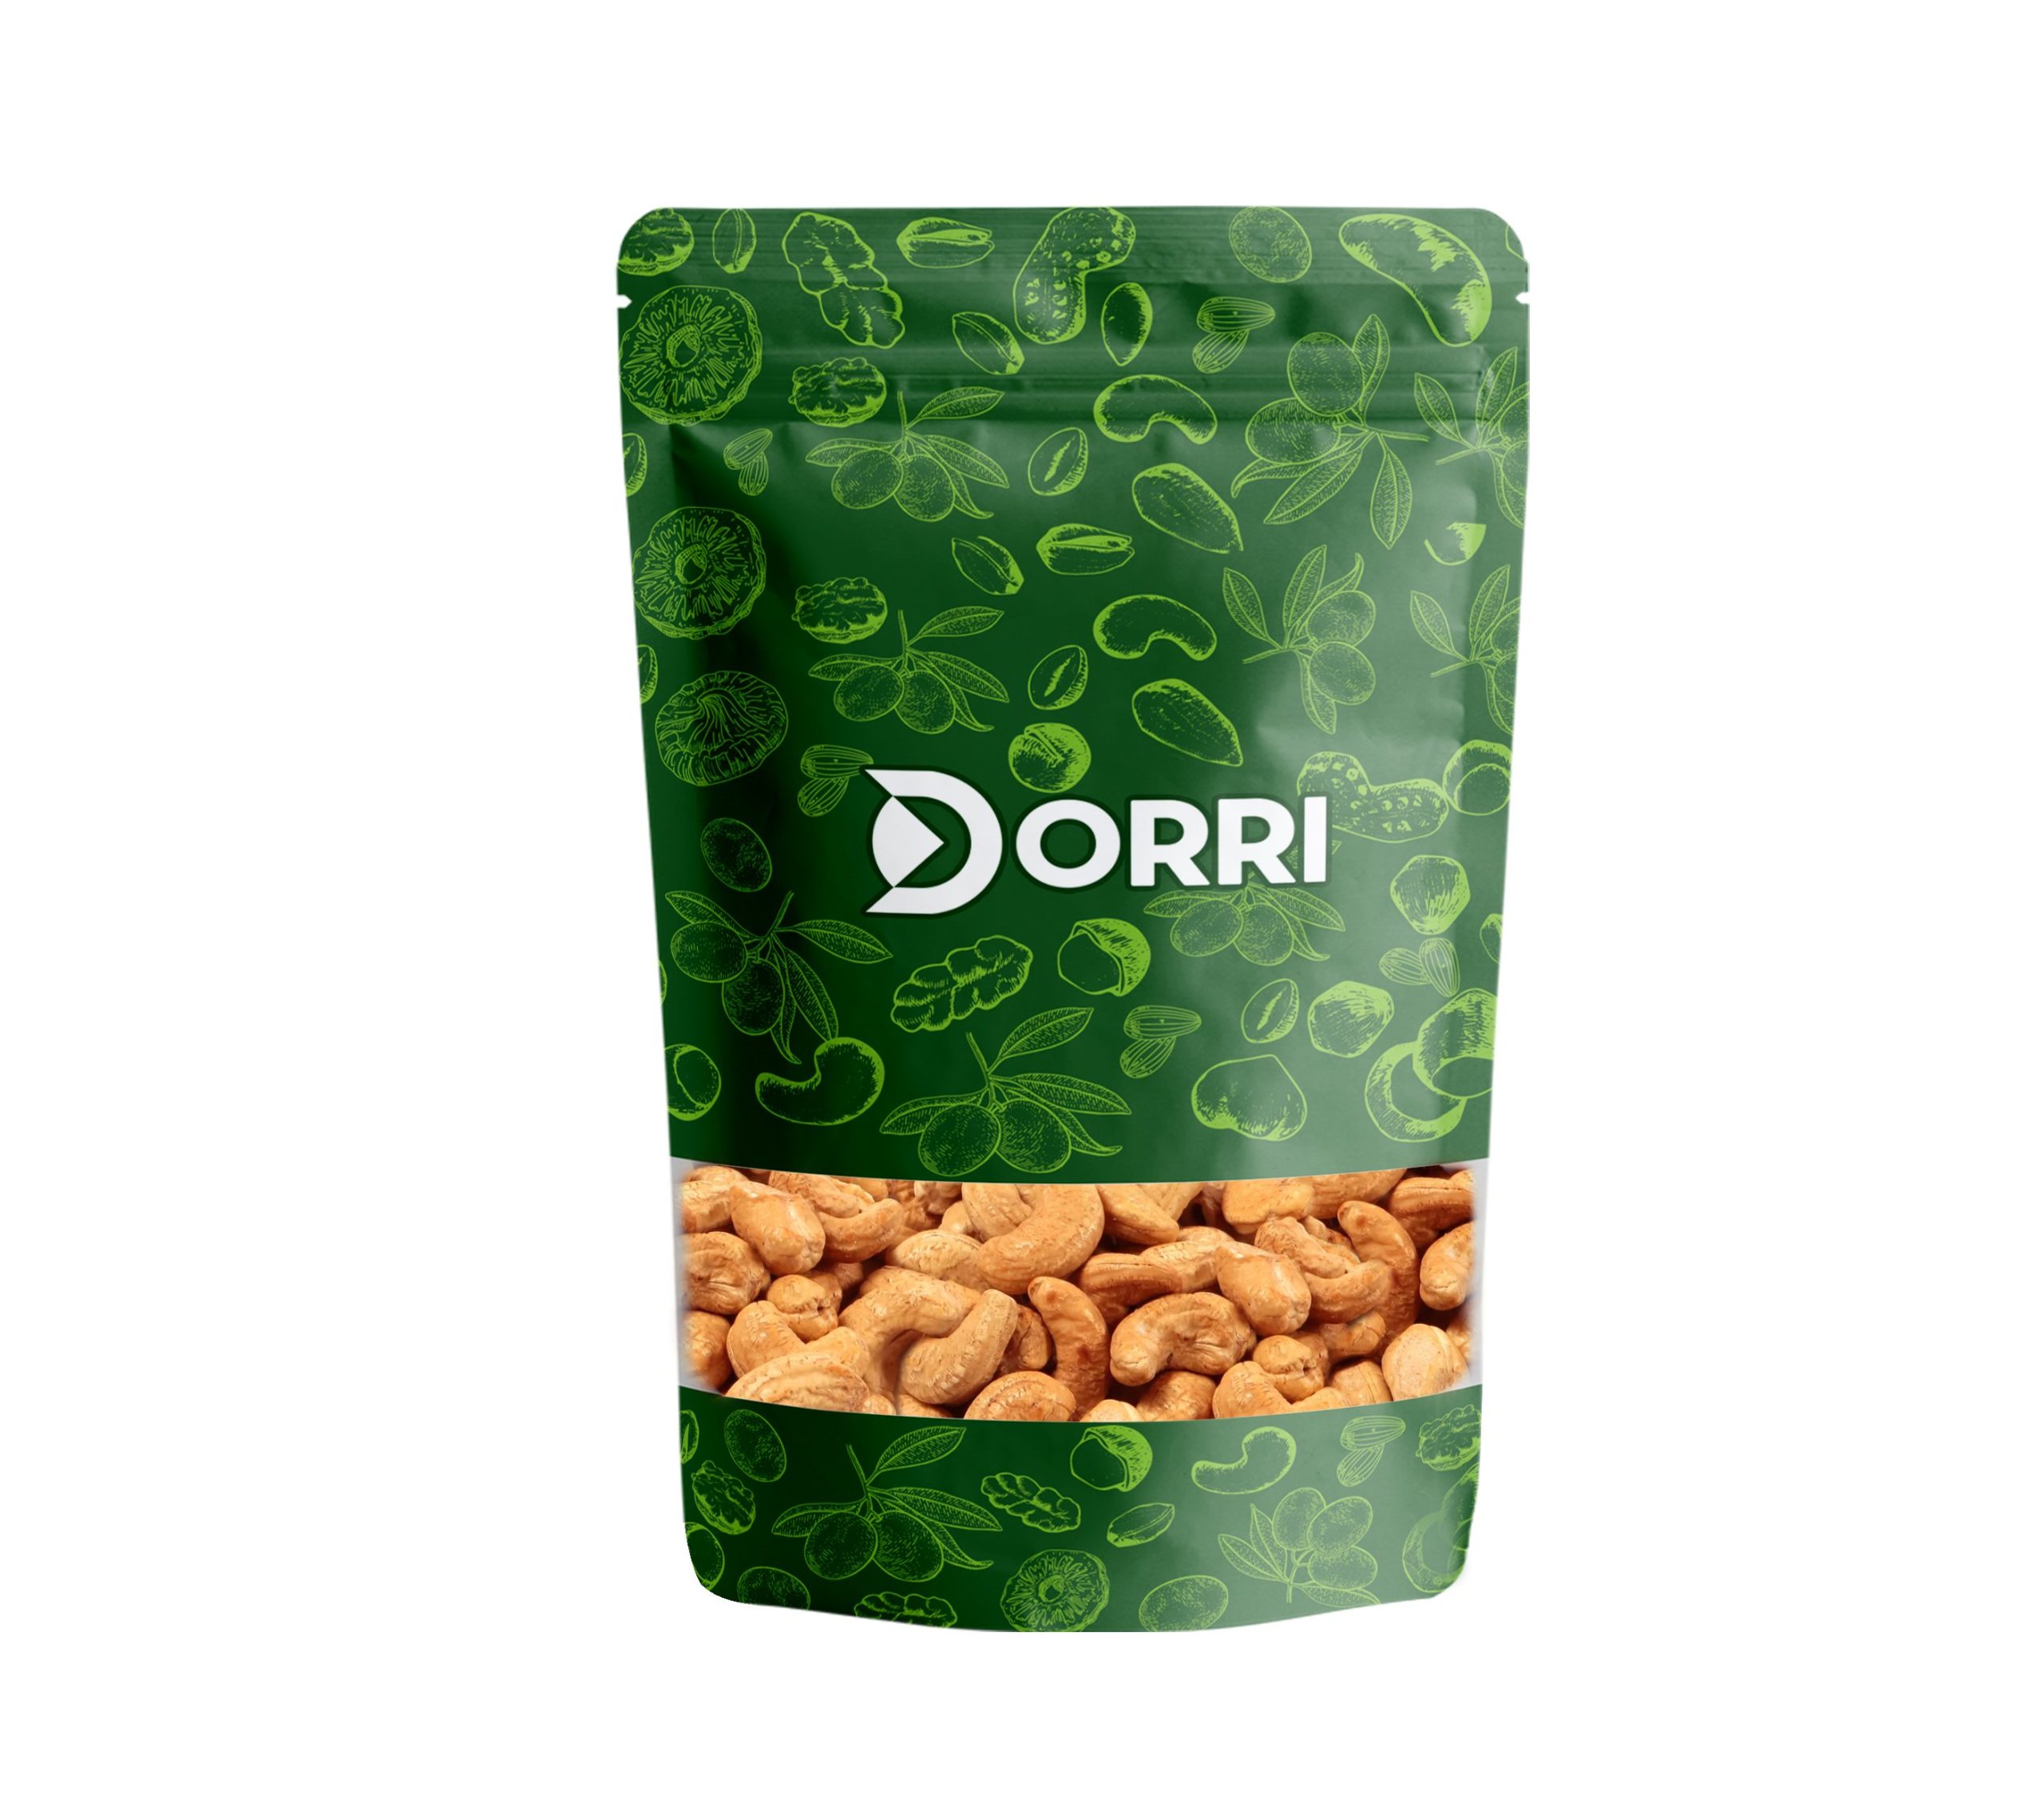 Dorri - Roasted (Unsalted) Cashews